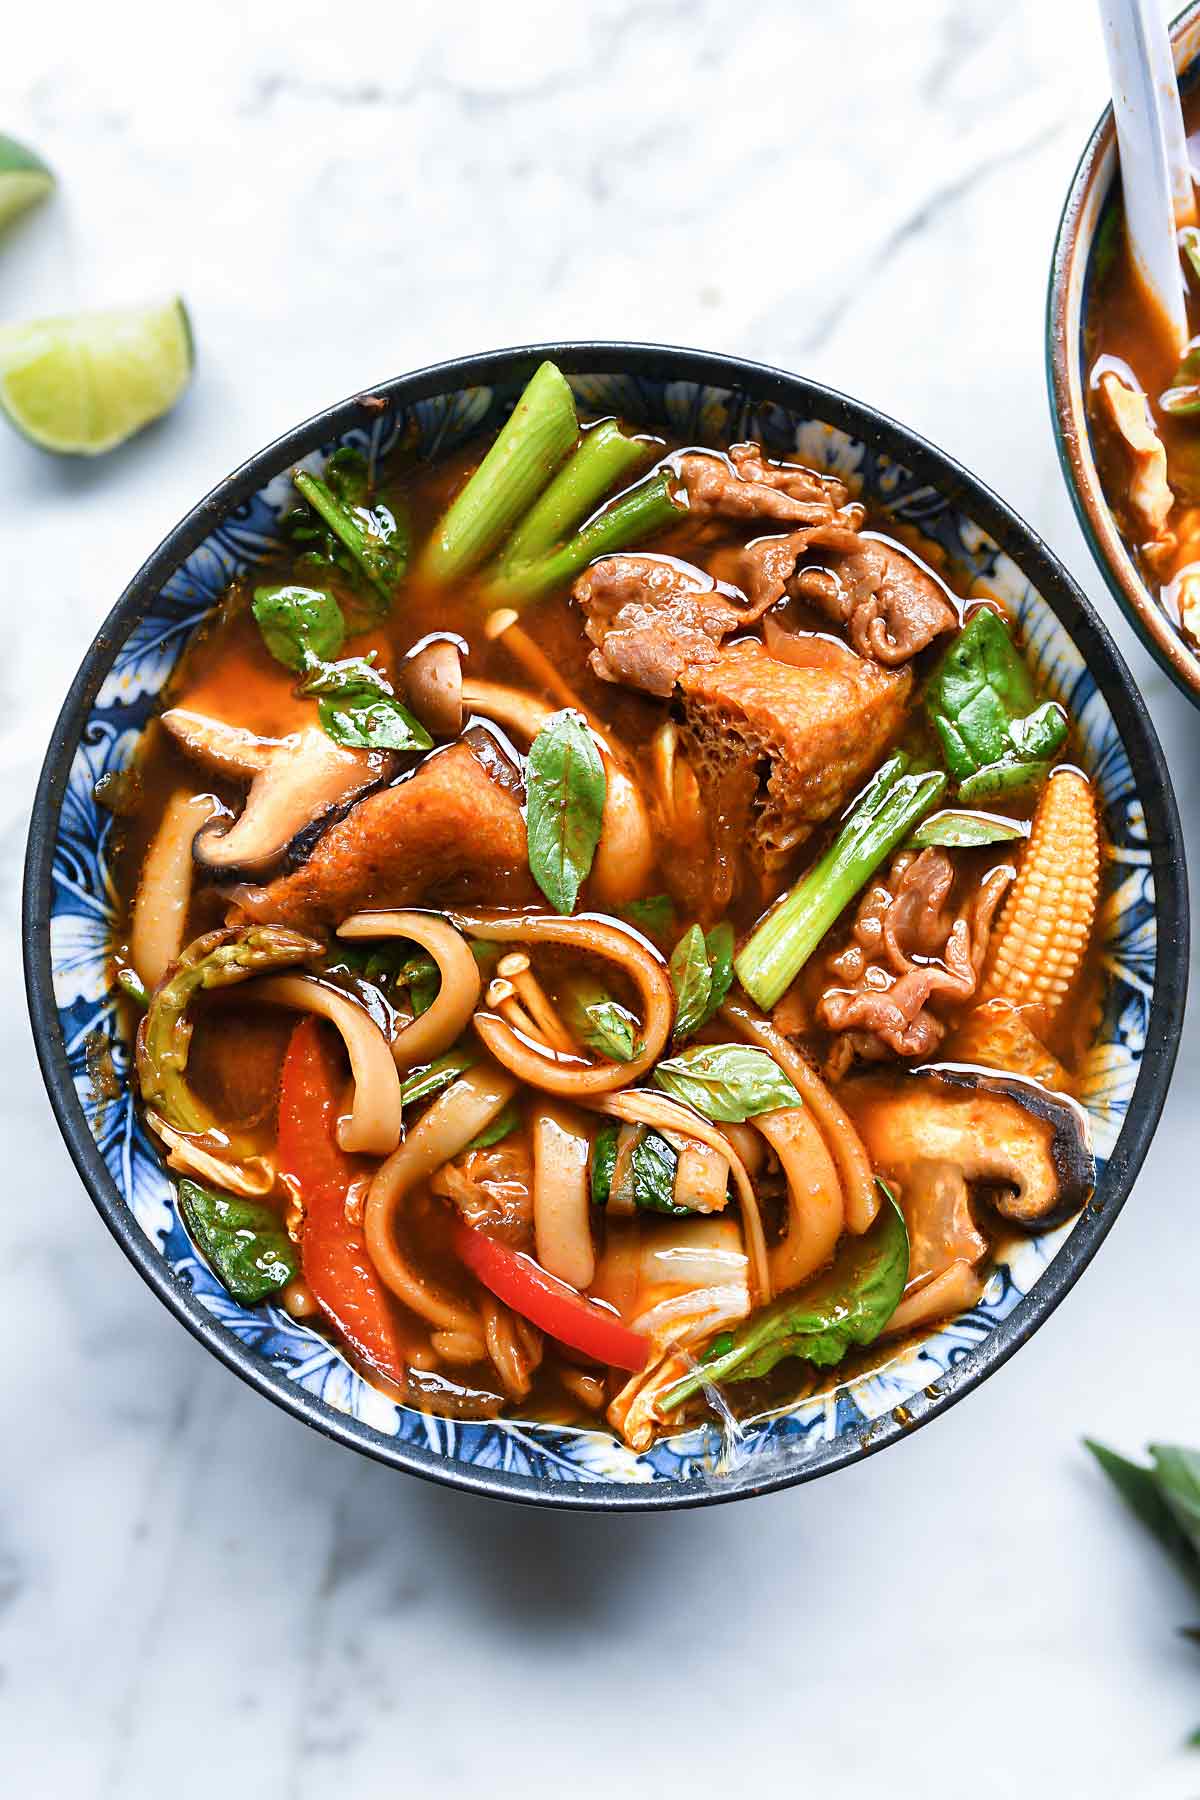 https://www.foodiecrush.com/wp-content/uploads/2018/02/Asian-Red-Curry-Hot-Pot-foodiecrush.com-066.jpg